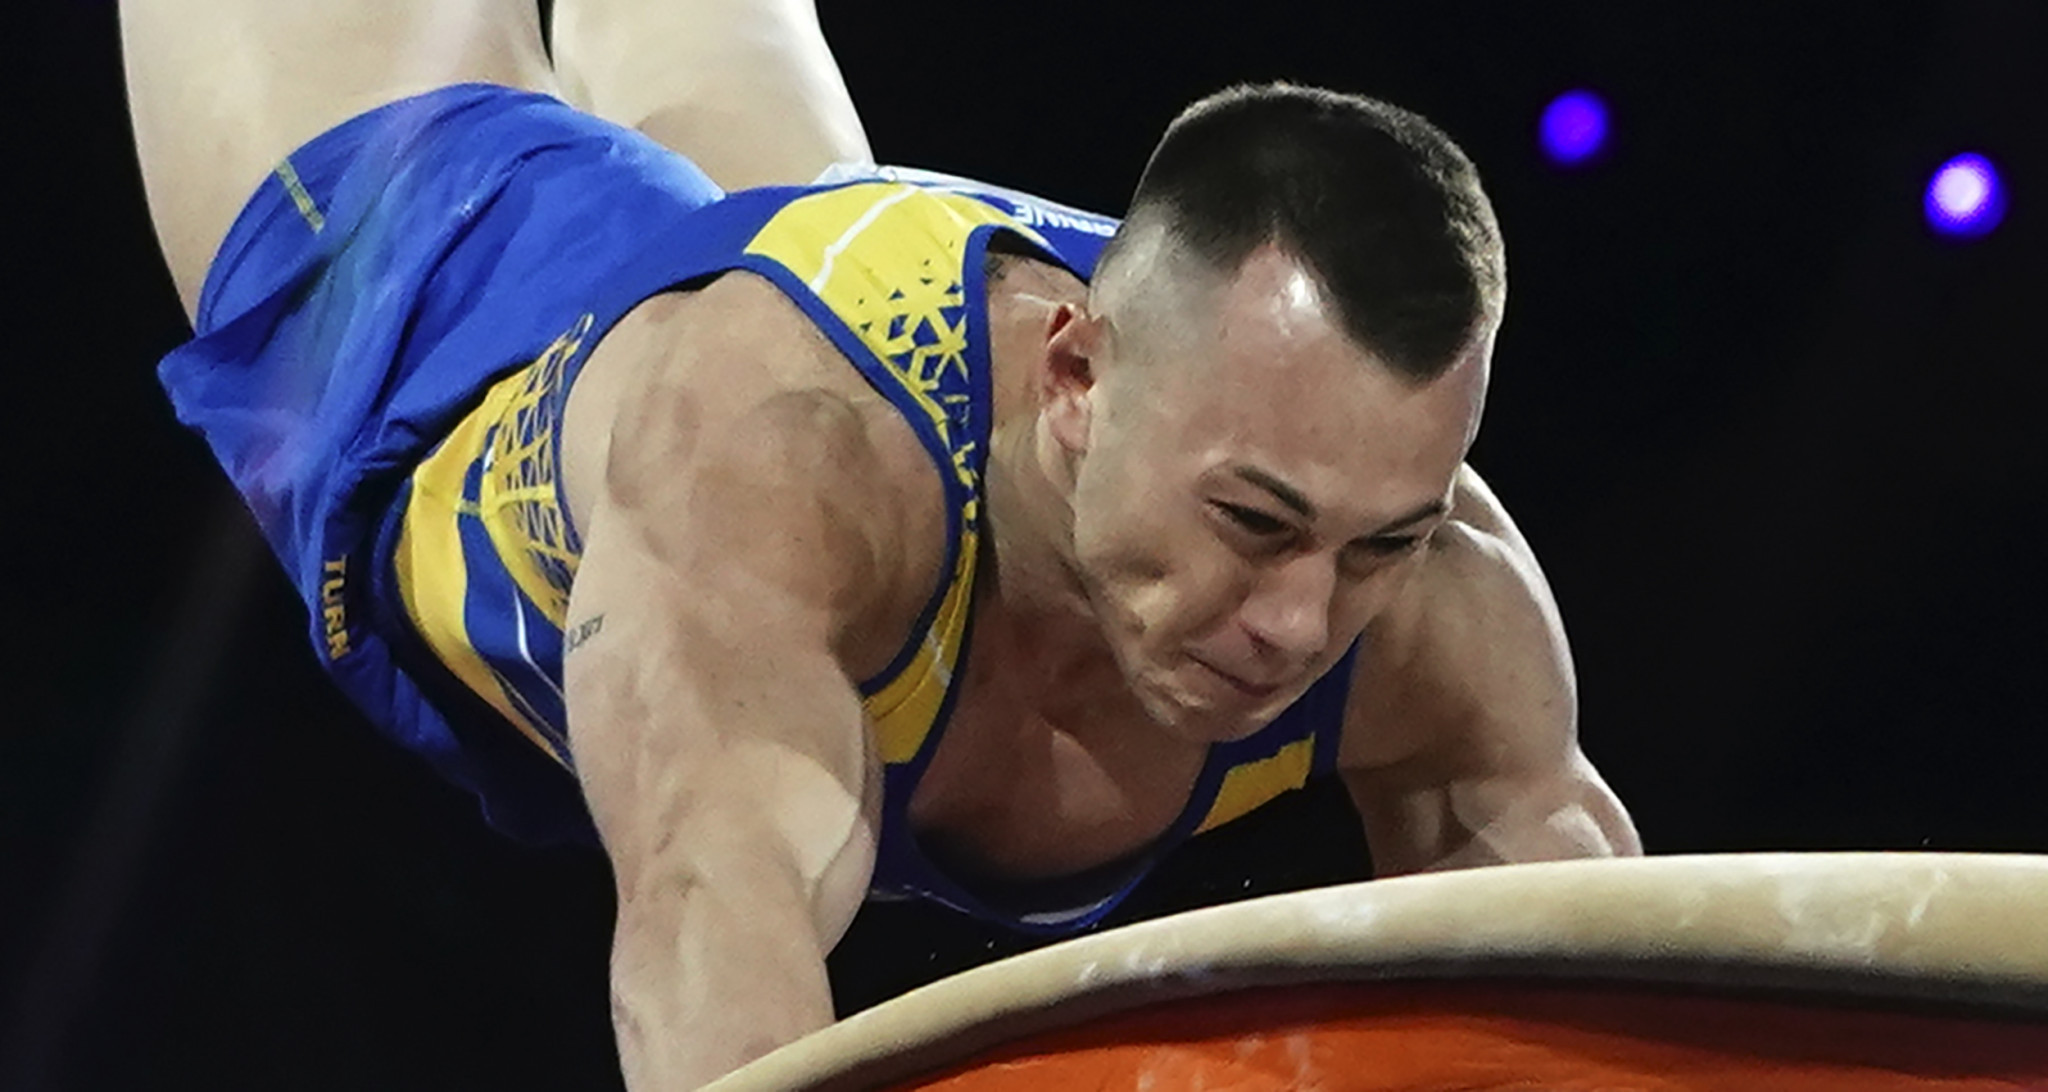 Ukraine's Igor Radivilov won the men's vault event at the FIG Apparatus World Cup in Cottbus ©Getty Images